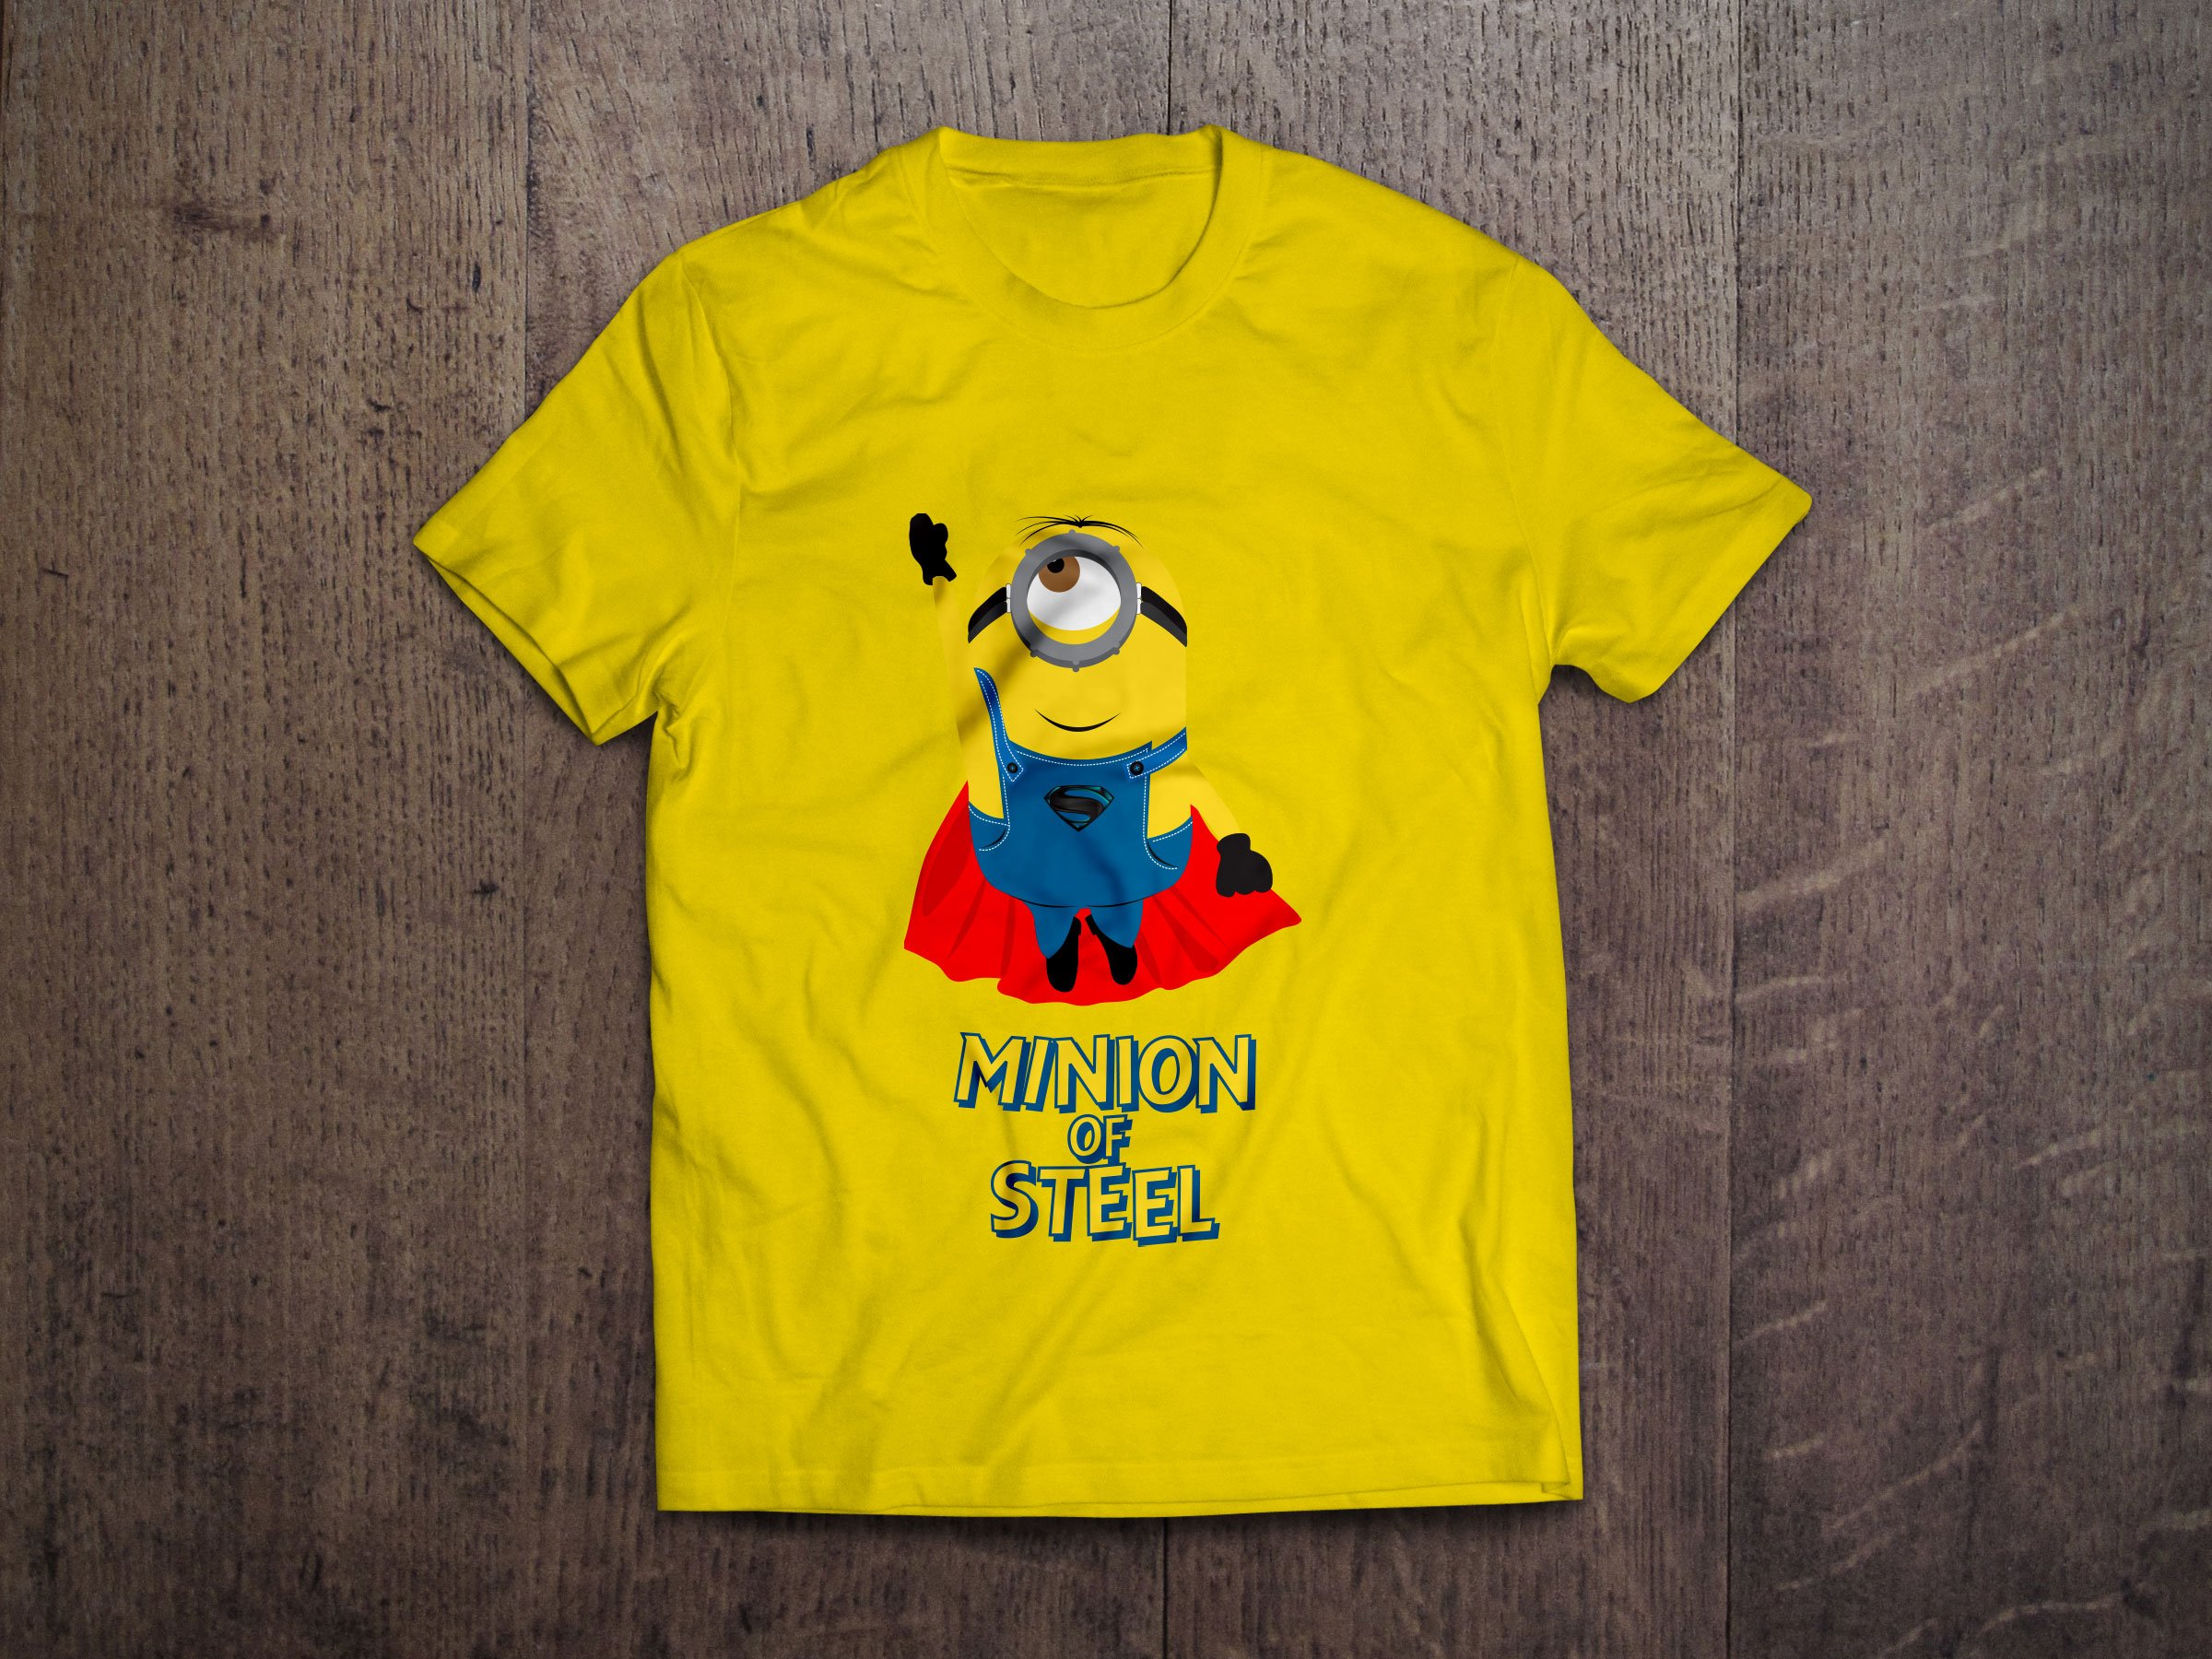 Minion-t-shirts-design-yellow-shirt.jpg